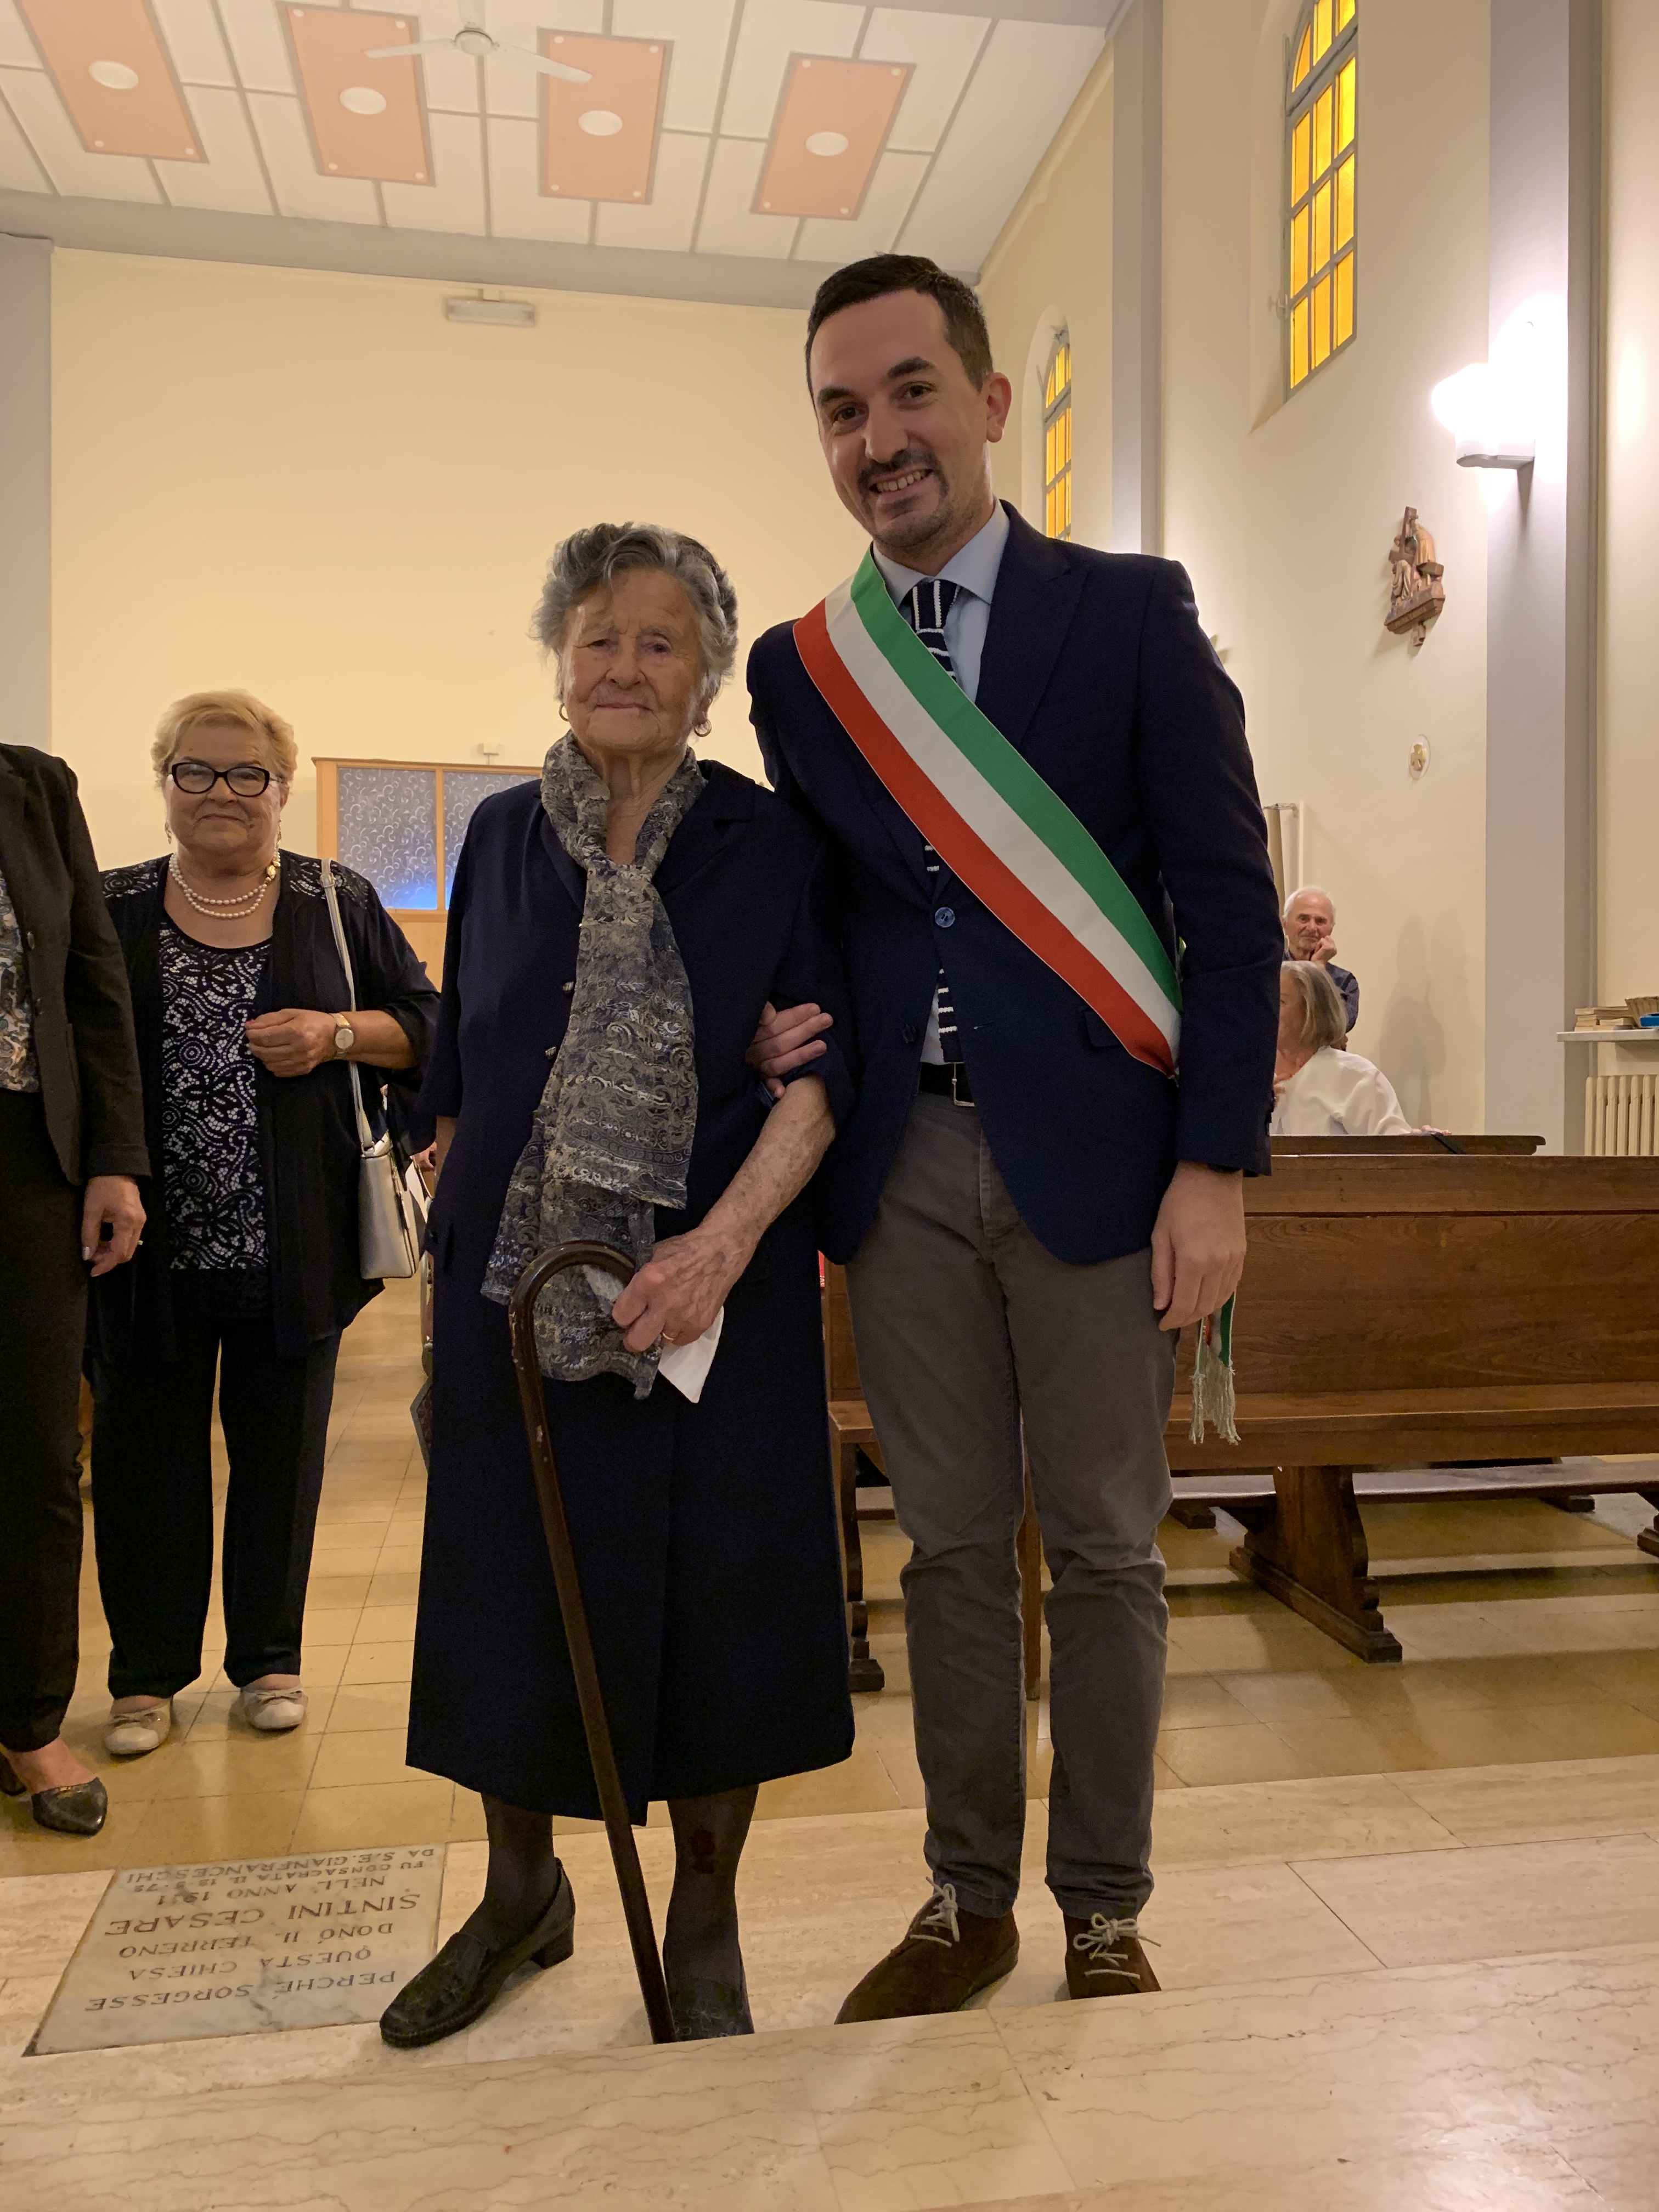 La signora Giuseppina Farabegoli compie 100 anni